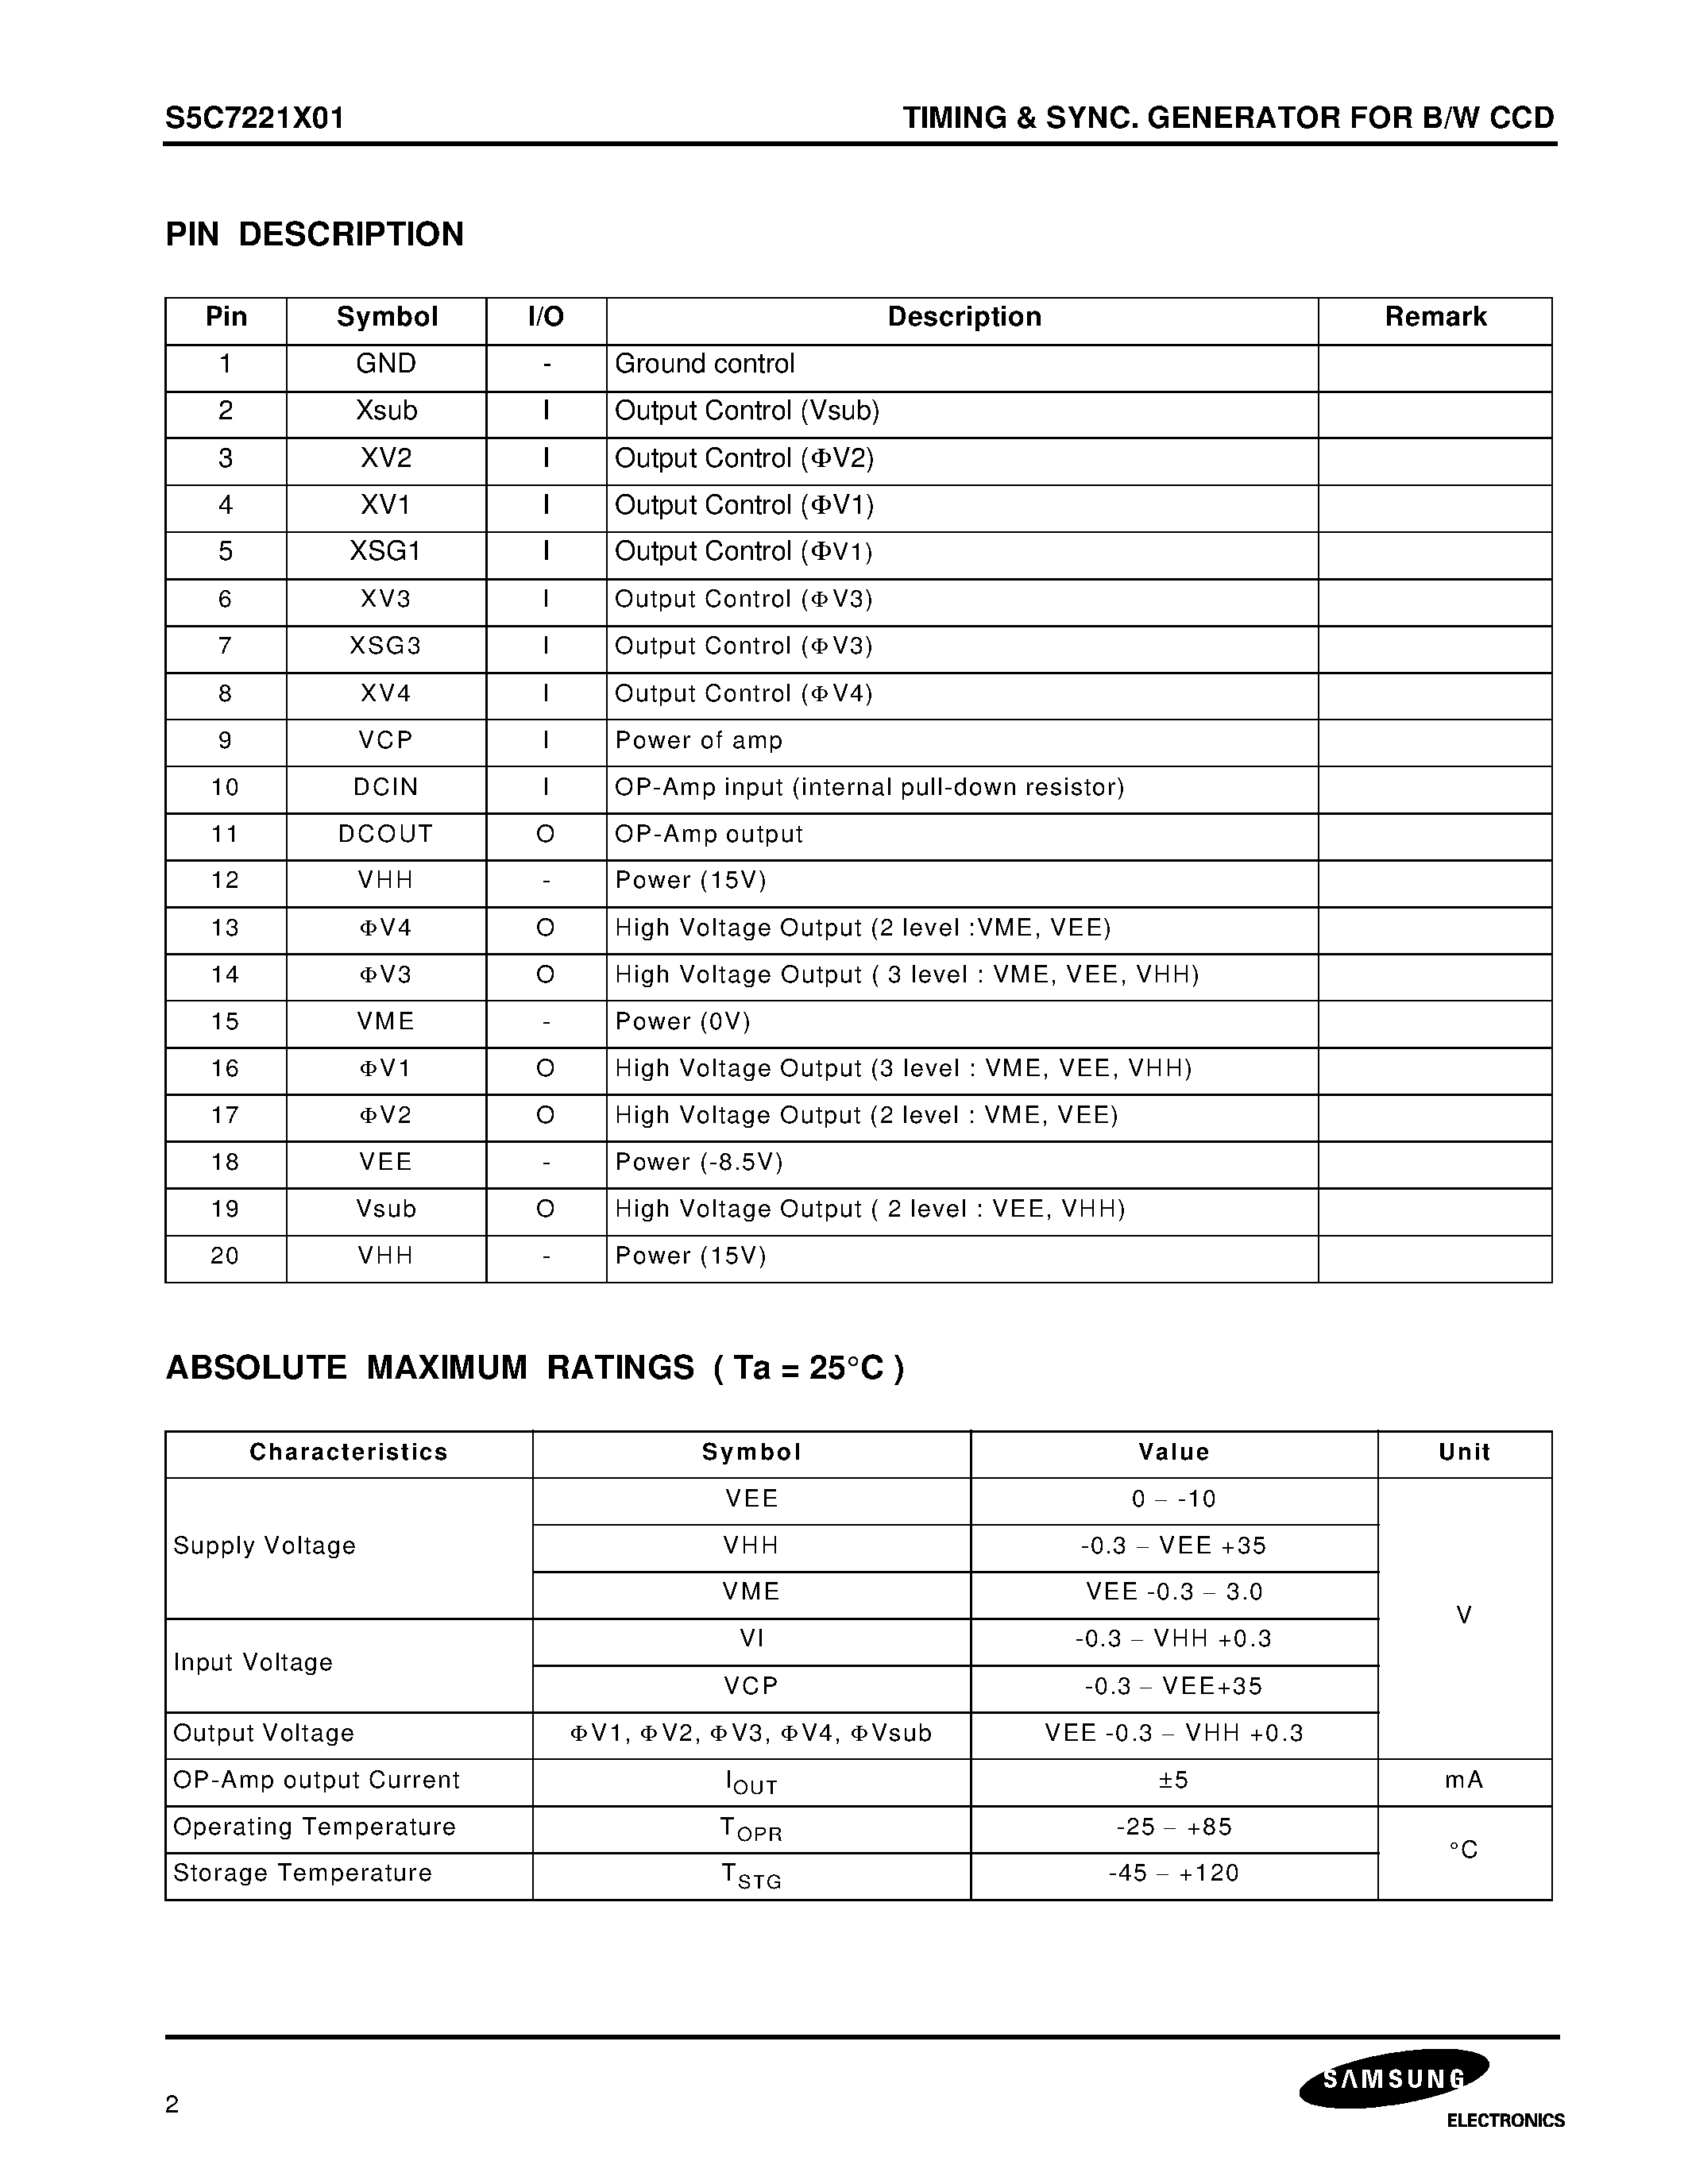 Datasheet S5C7221X01-V0B0 - TIMING & SYNC. GENERATOR FOR B/W CCD page 2